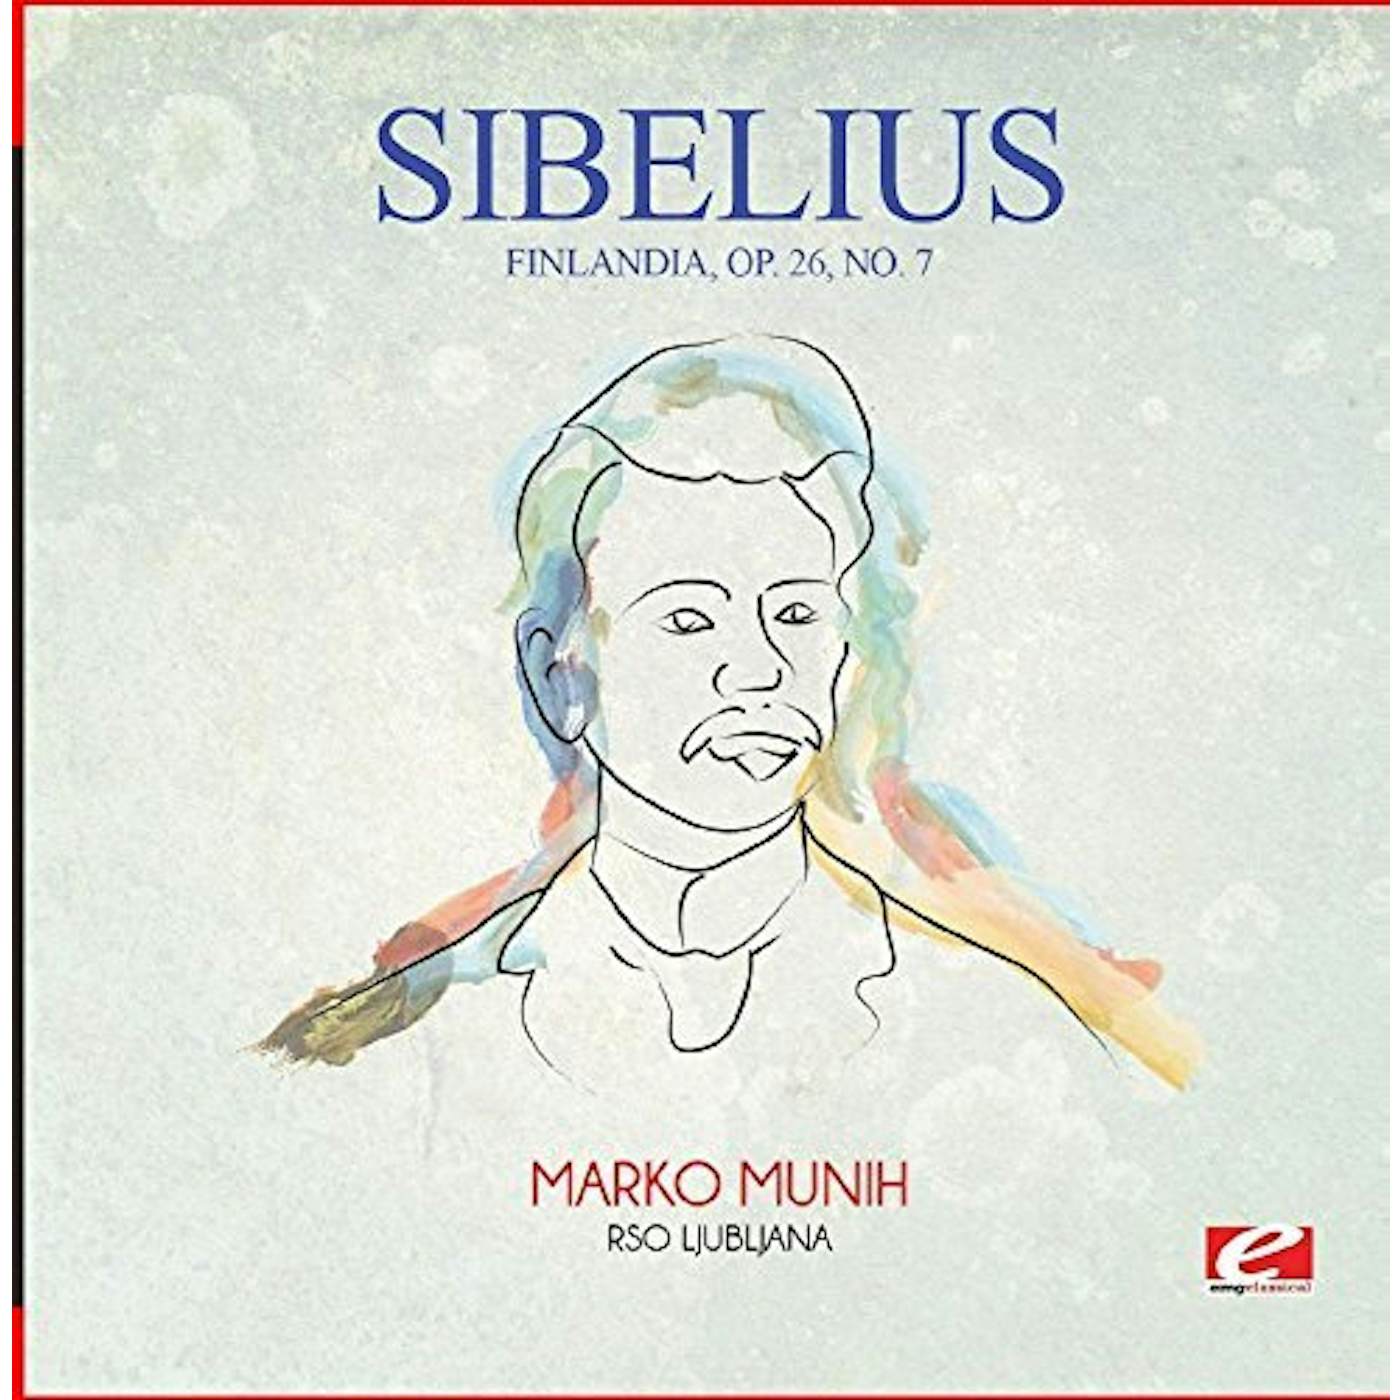 Sibelius FINLANDIA OP. 26 NO. 7 CD